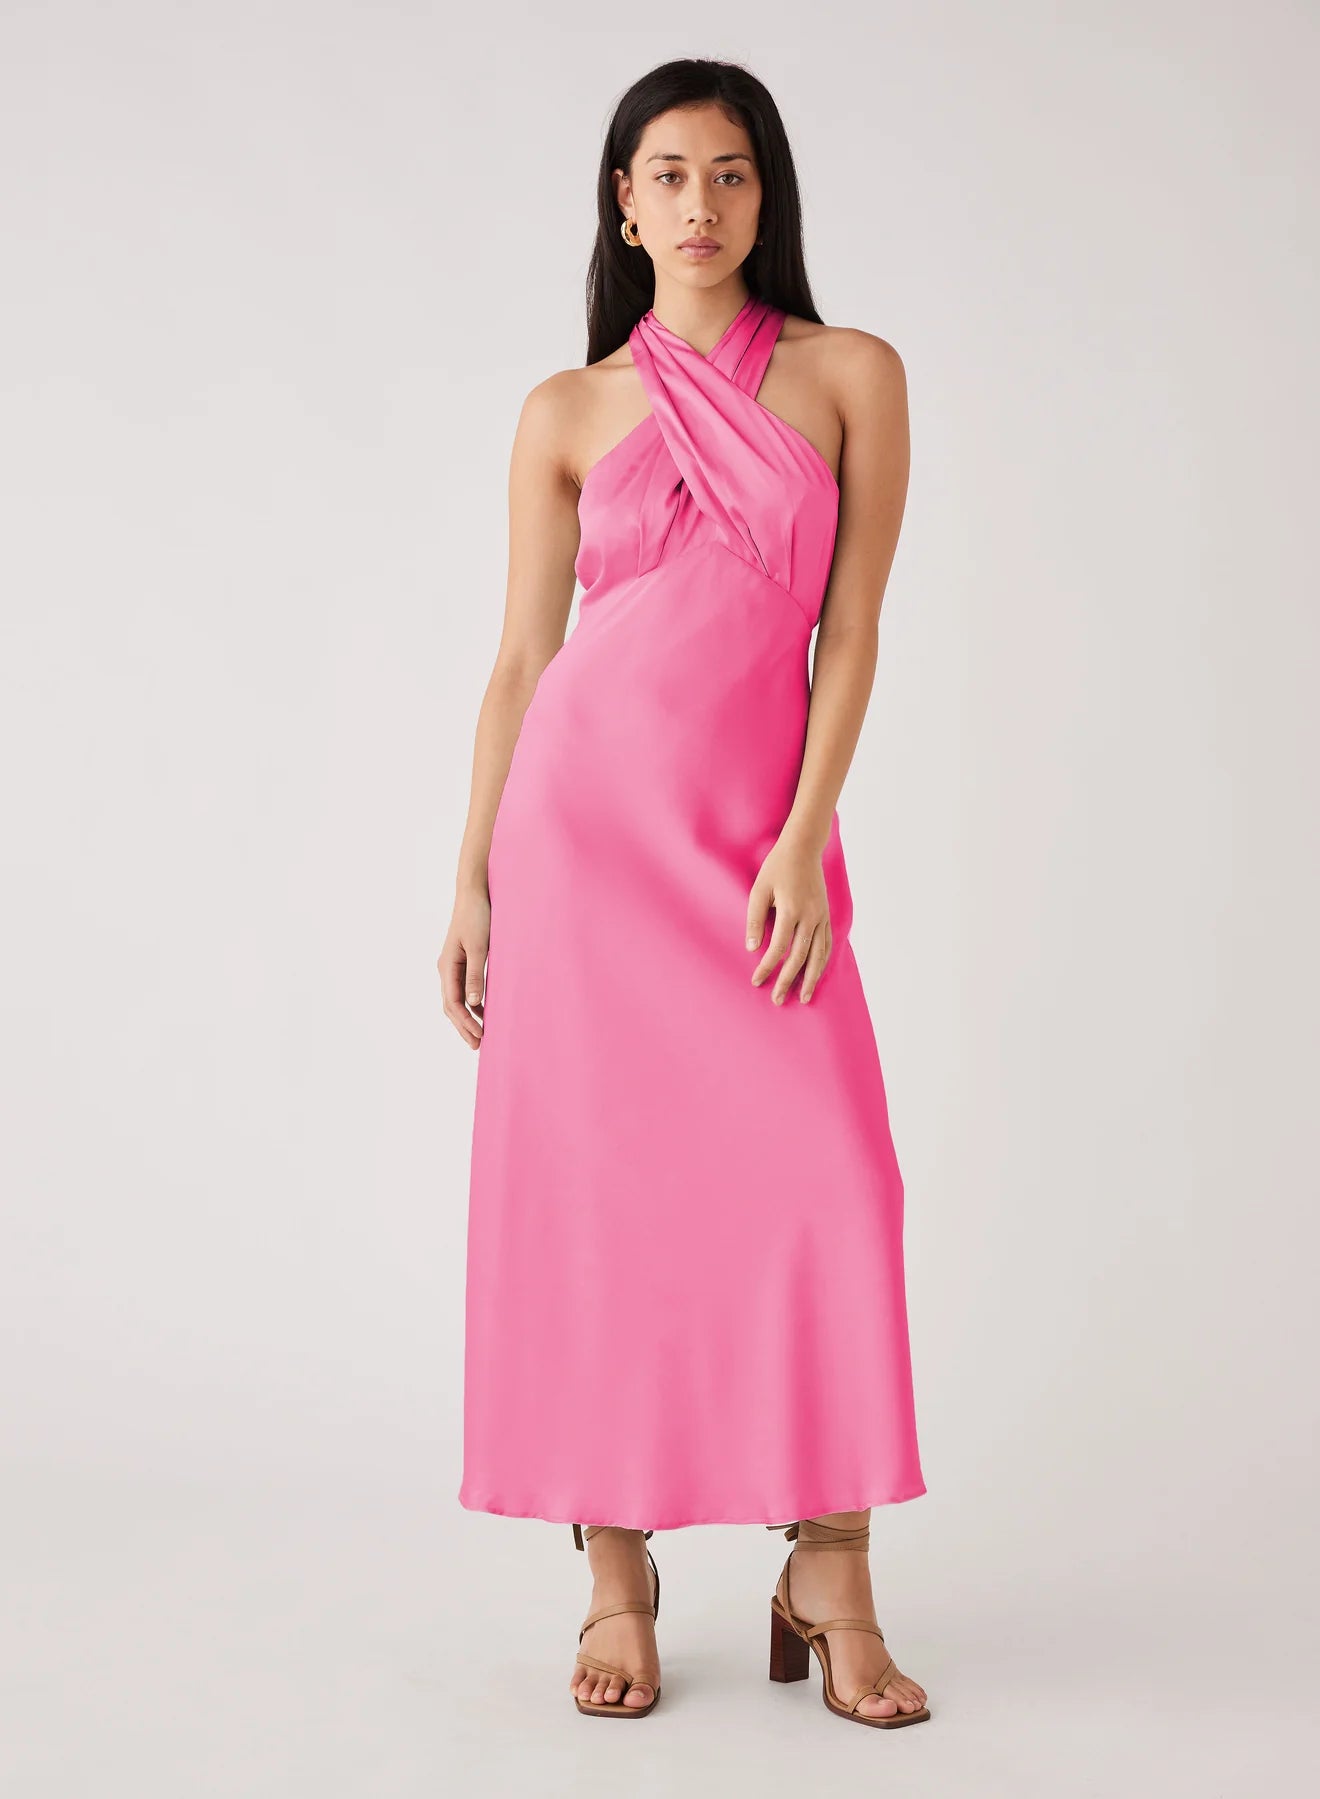 Esmaee Paris Midi Dress - Pink